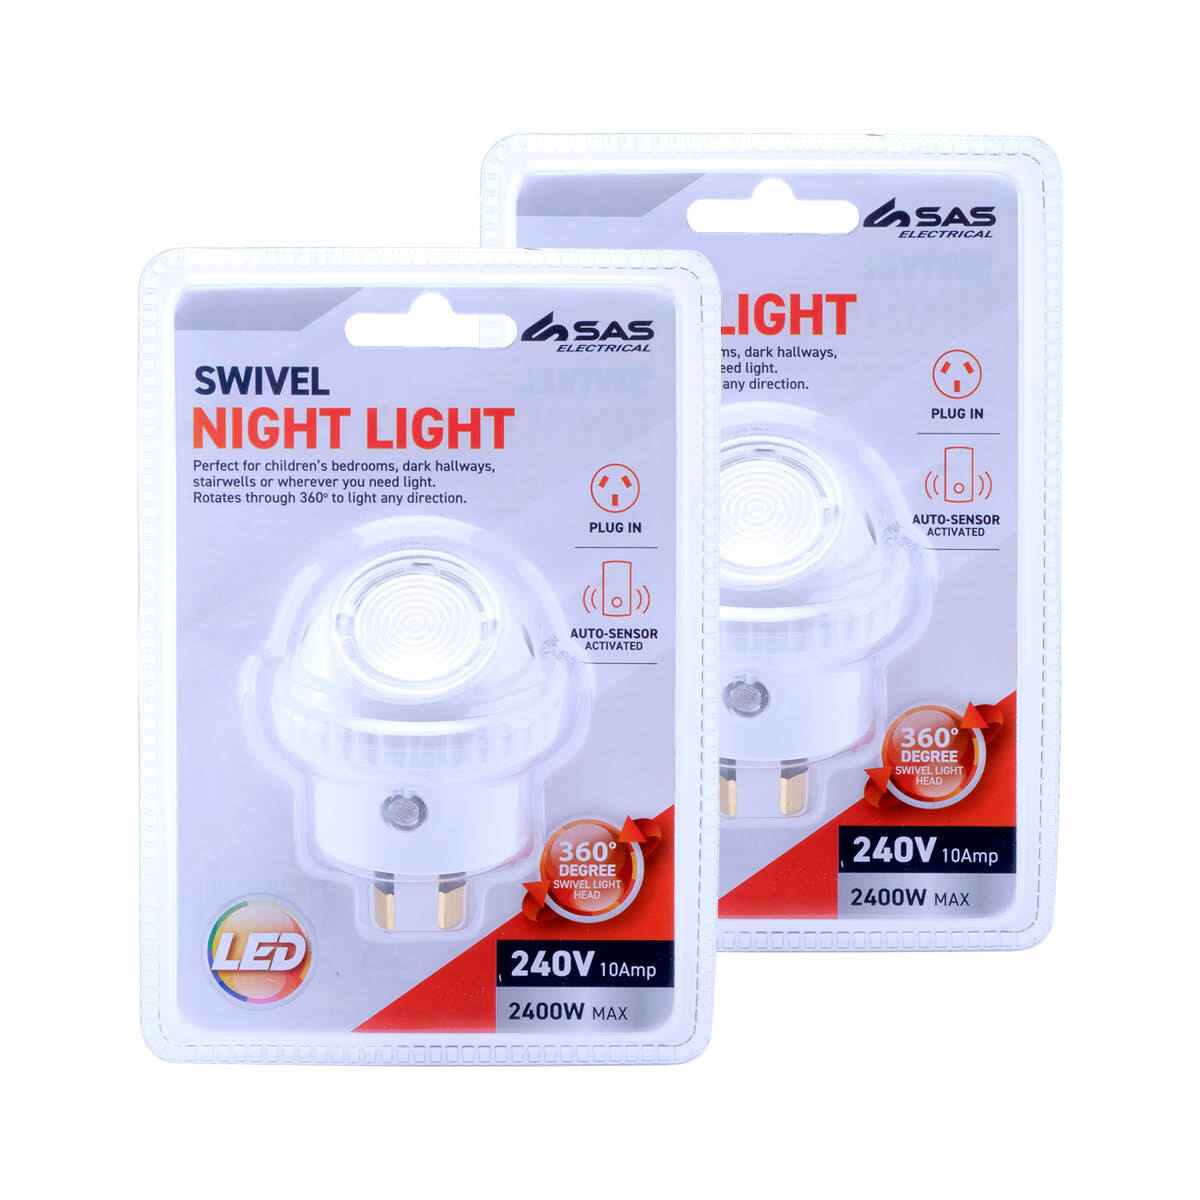 SAS Electrical 2PCE Night Light LED Plug In Auto Sensor 360 Degree Swivel Head